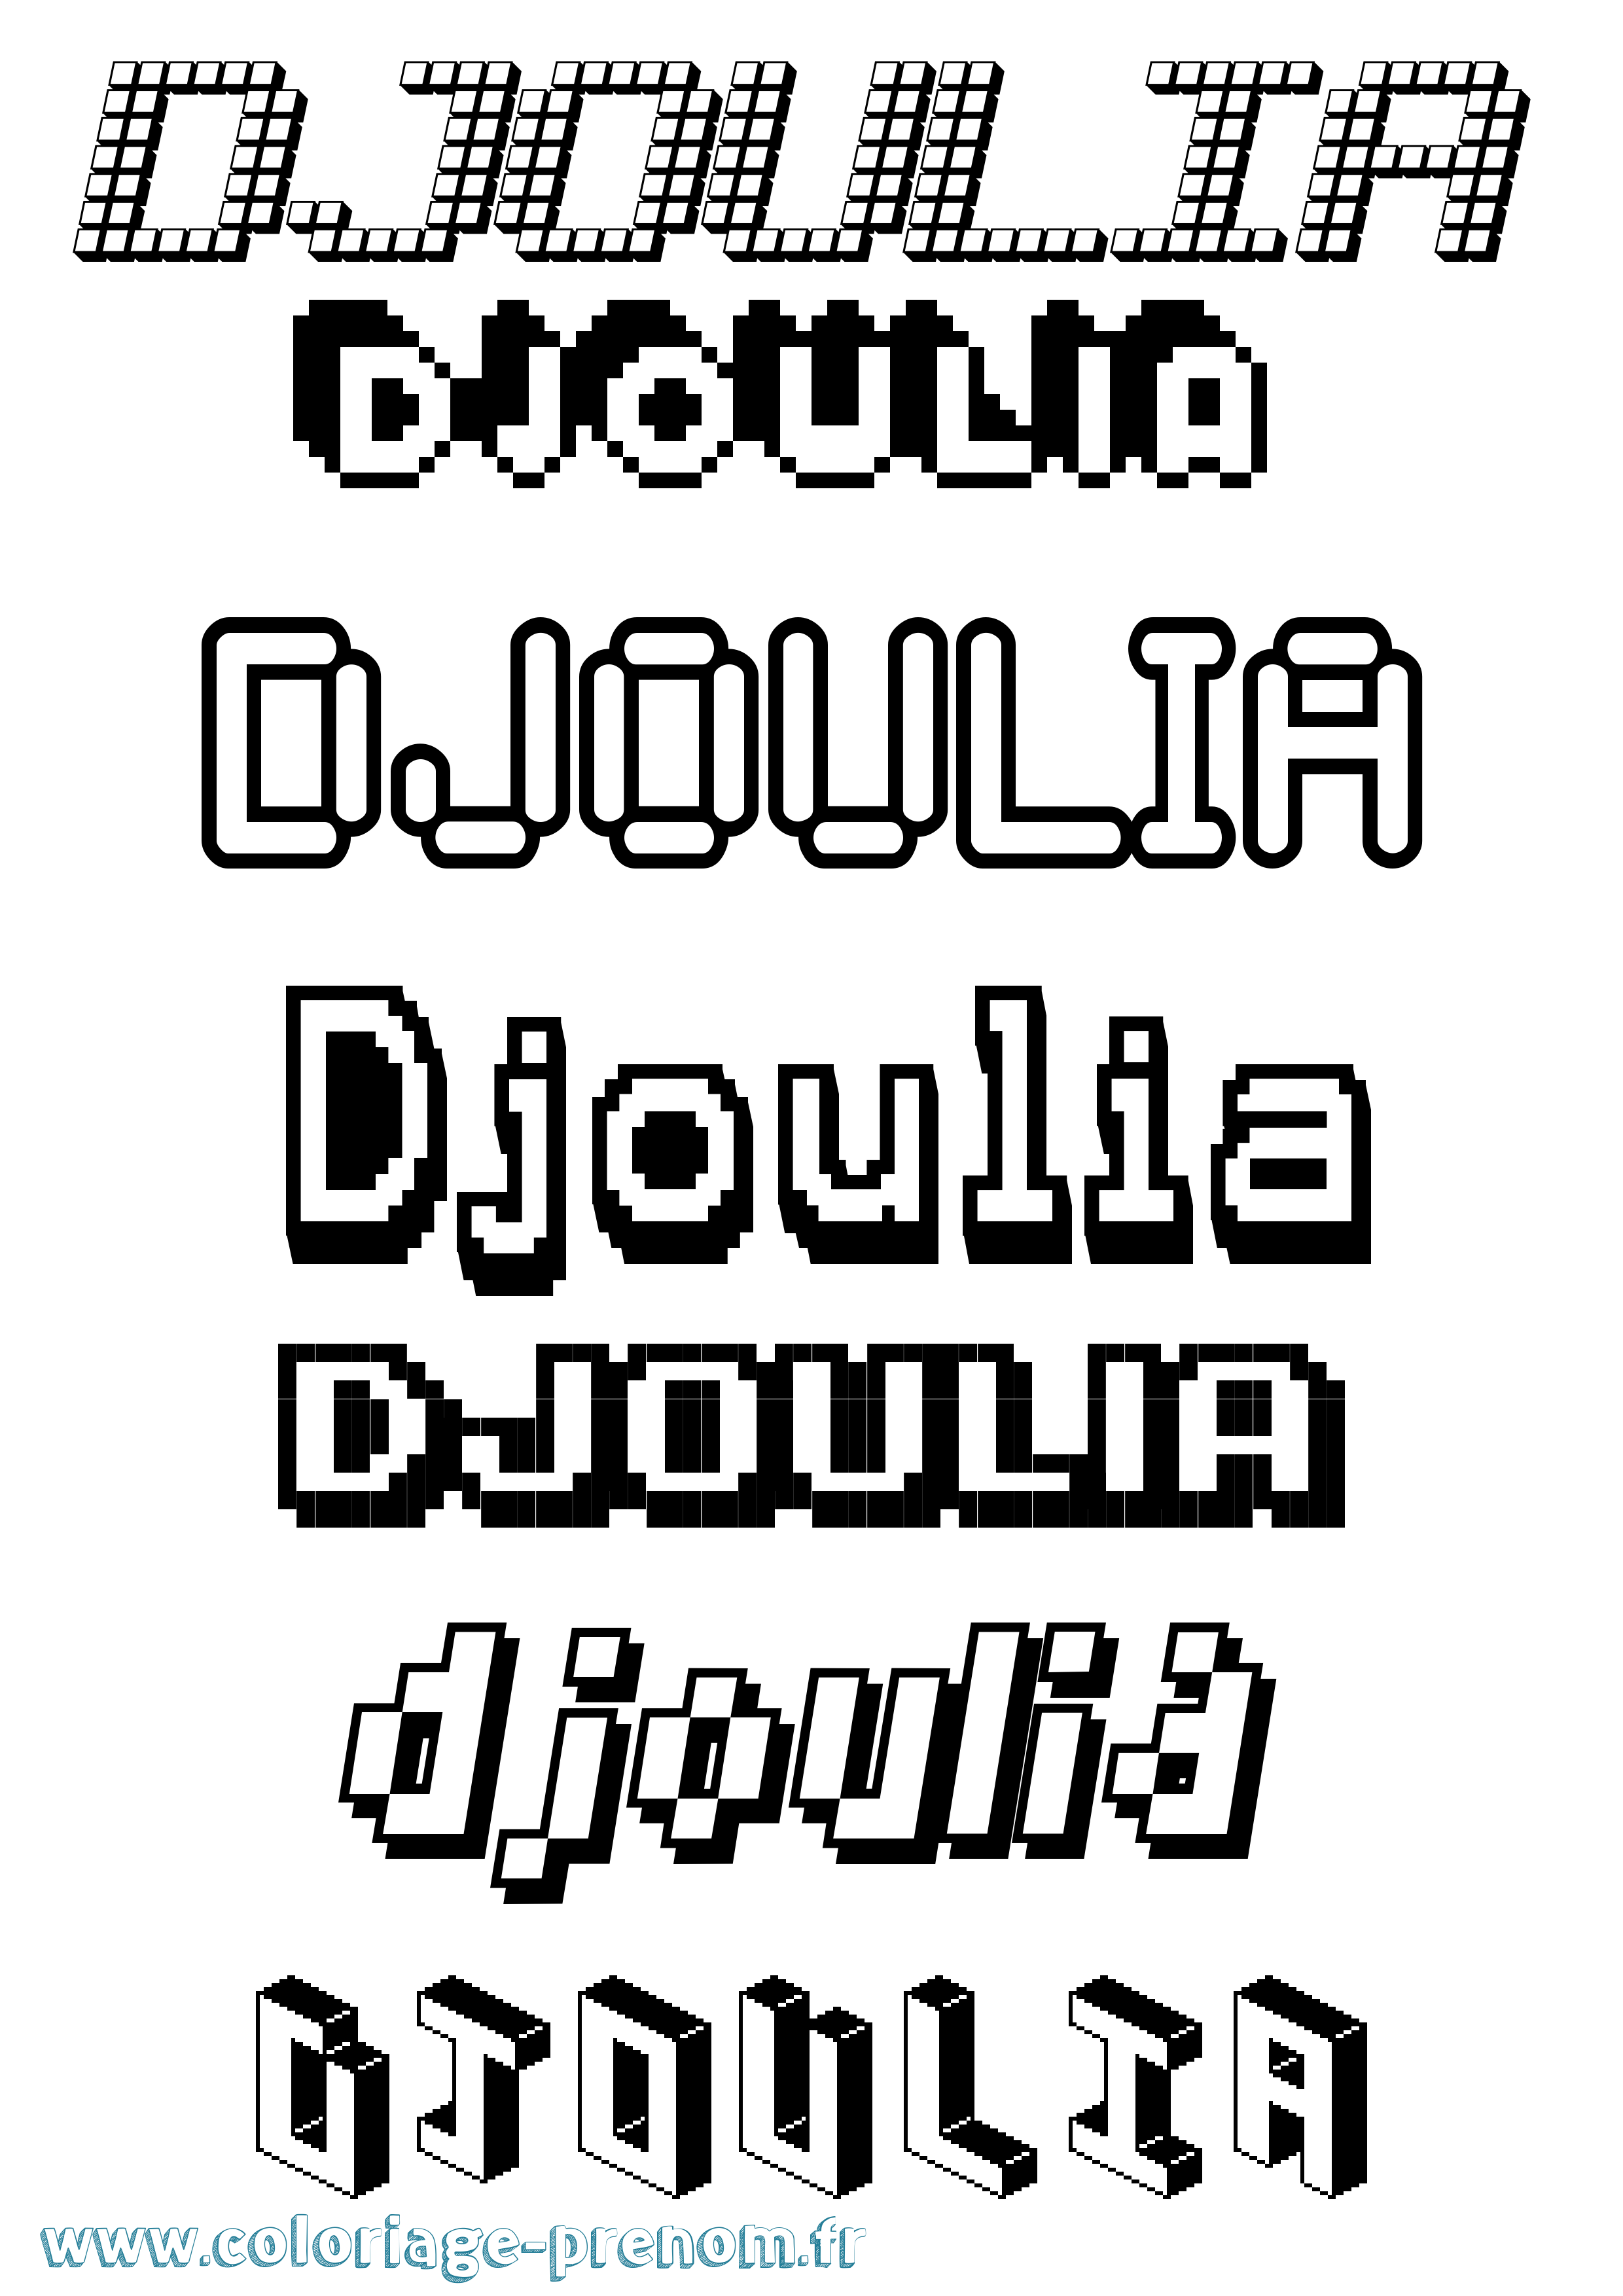 Coloriage prénom Djoulia Pixel